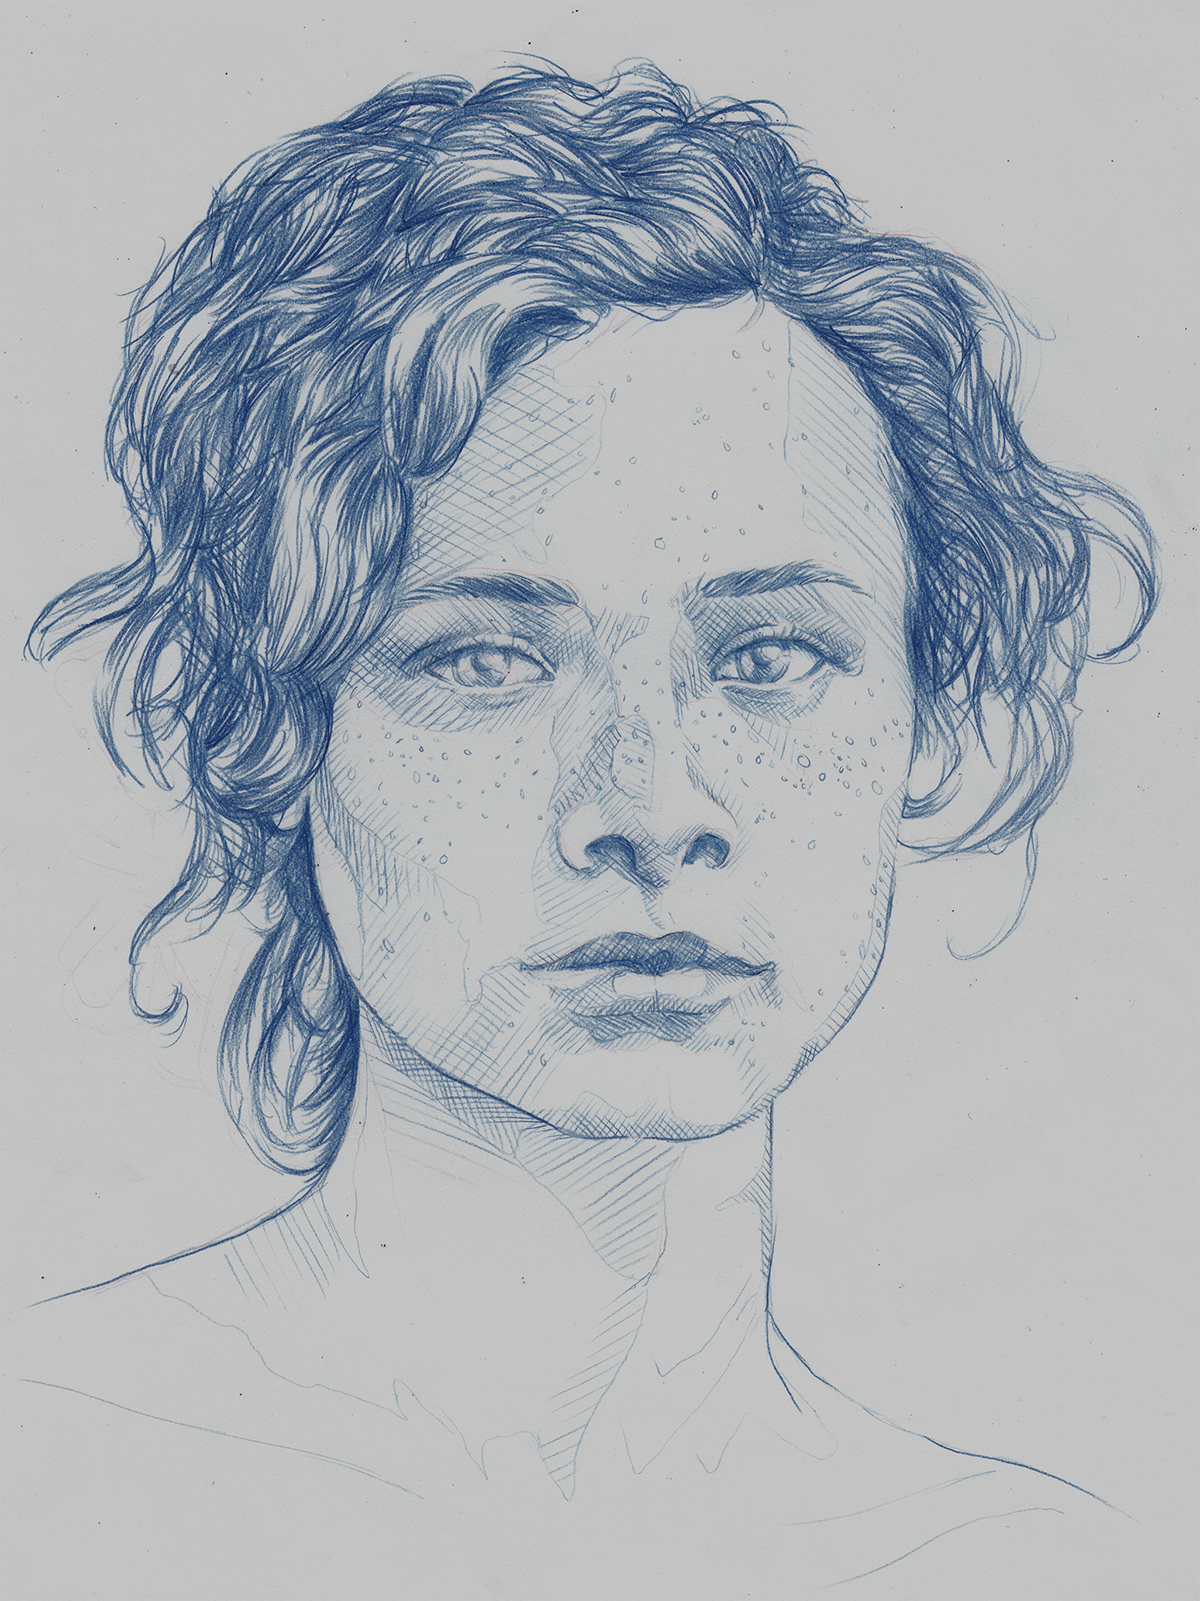 Pencil sketch portraits